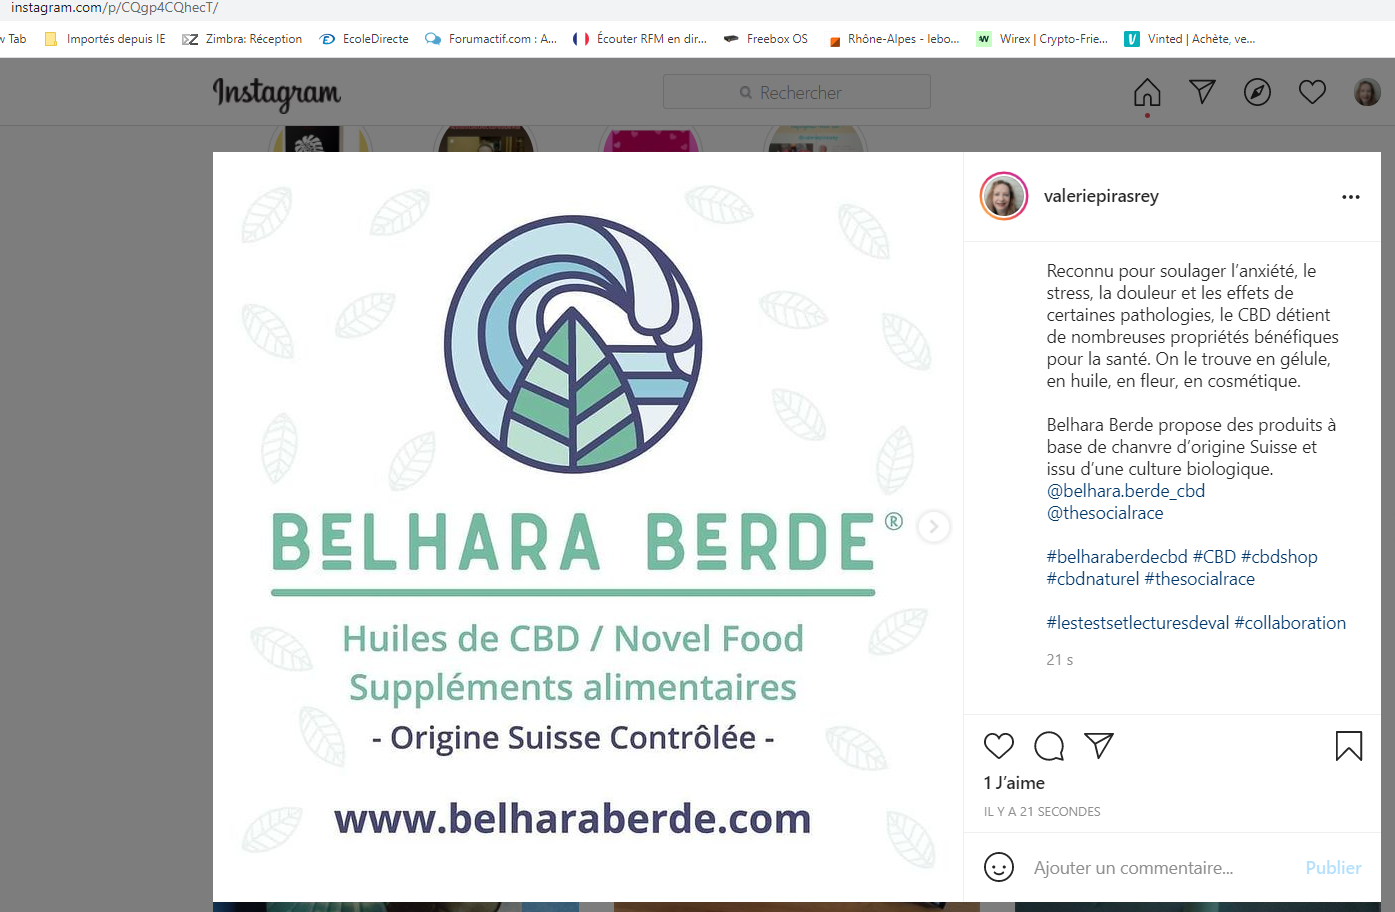 Promotion de la marque Belhara Berde